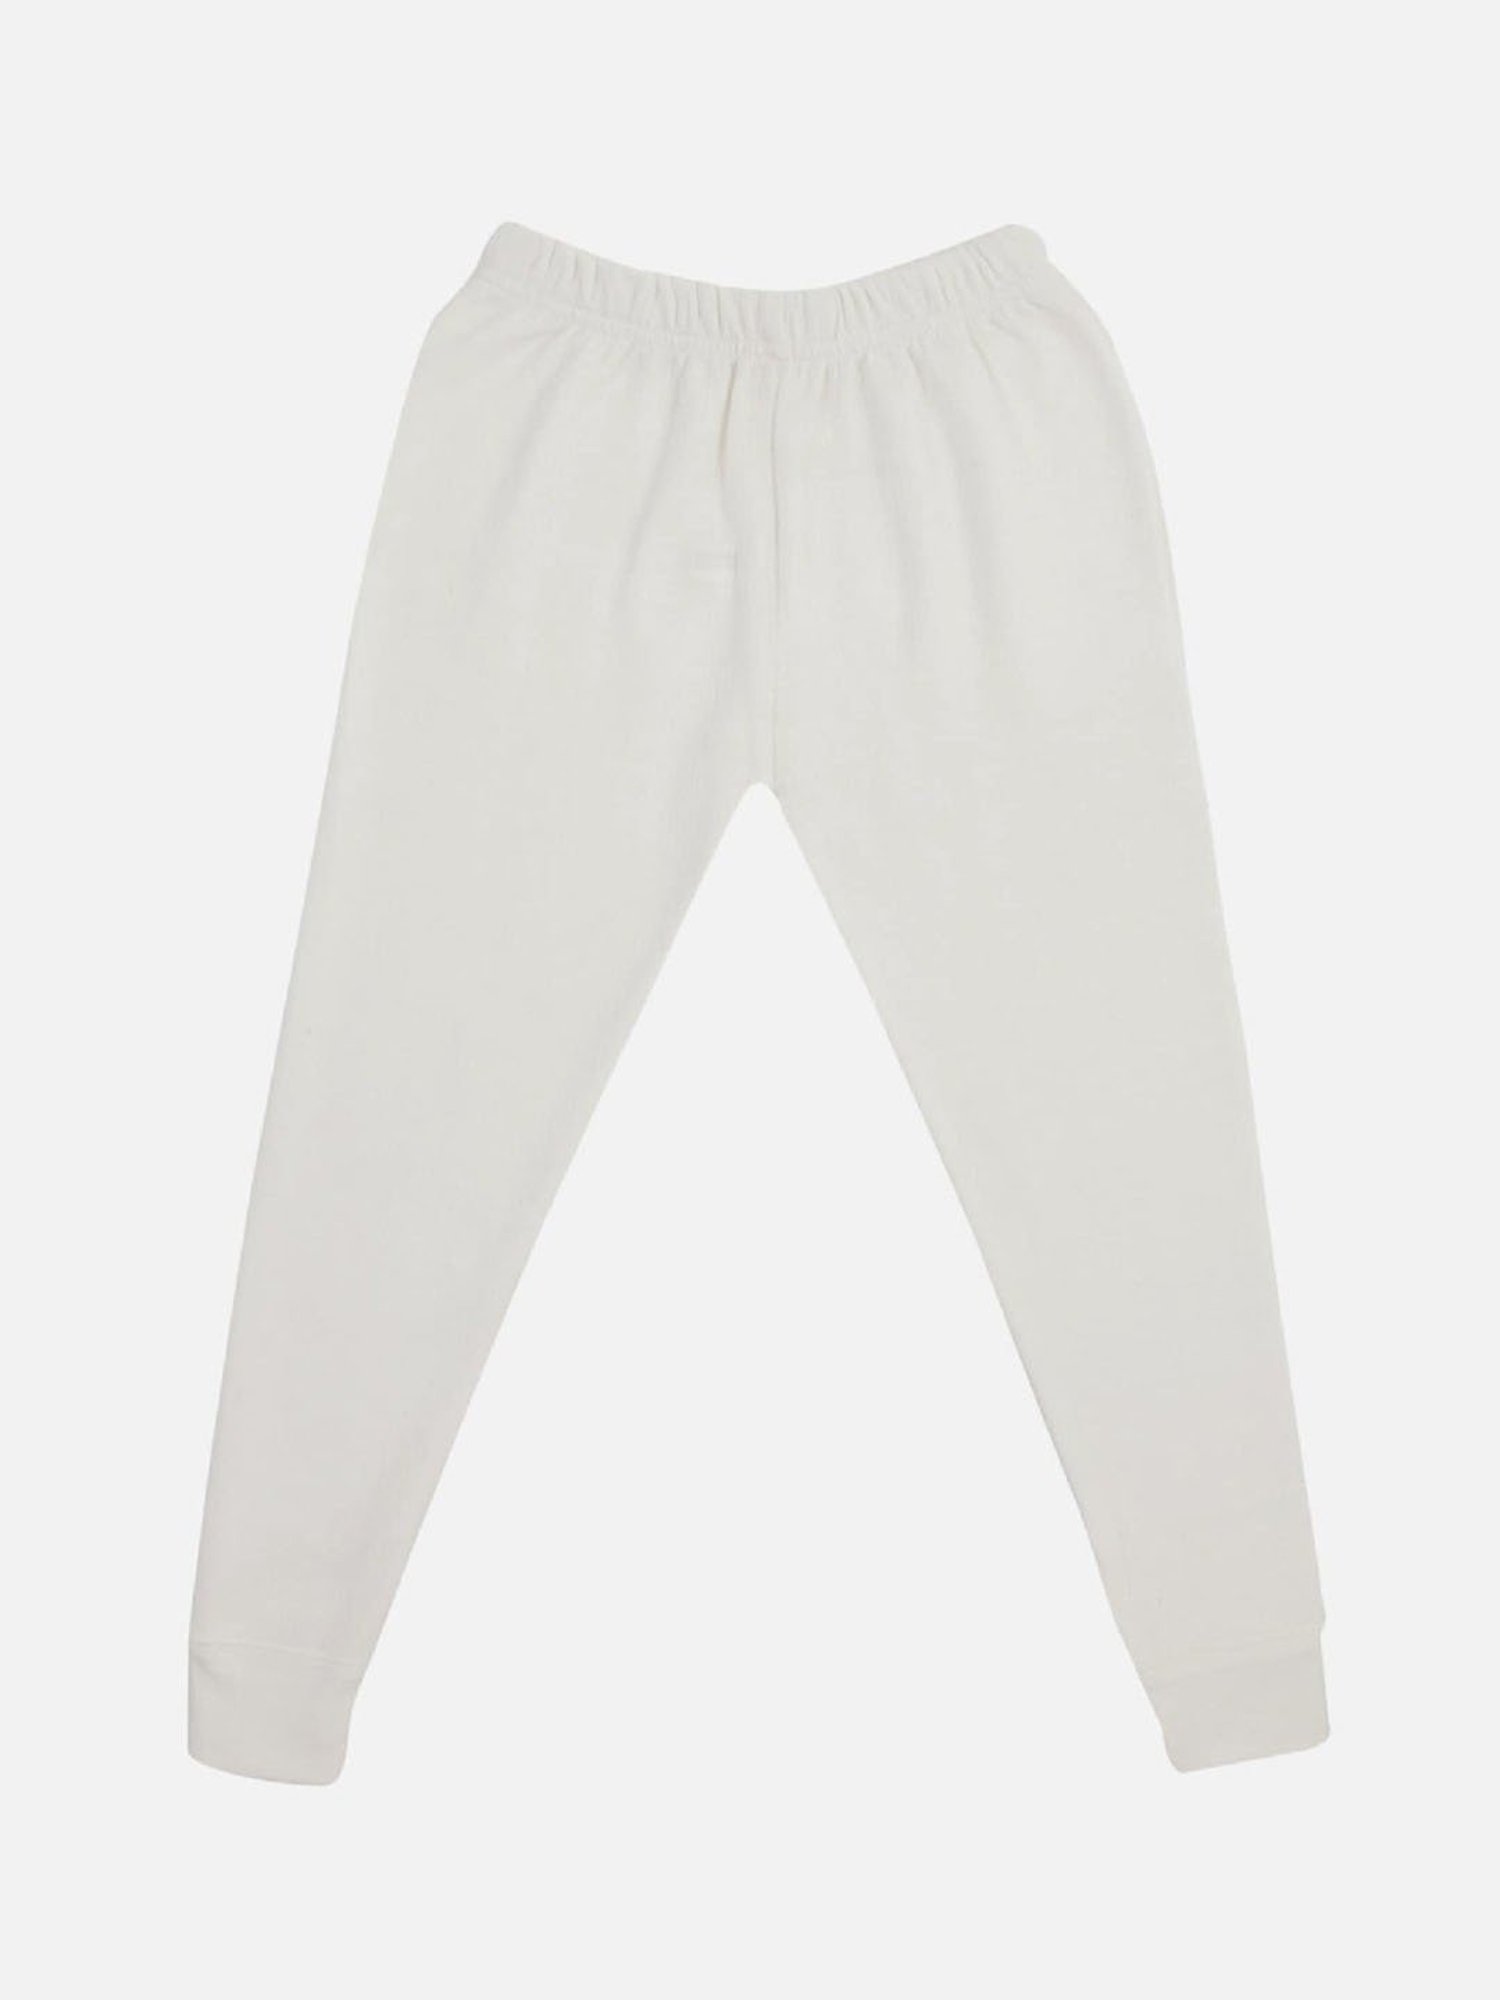 New Design Ladies Cotton Pants For Women / White Pants For Women